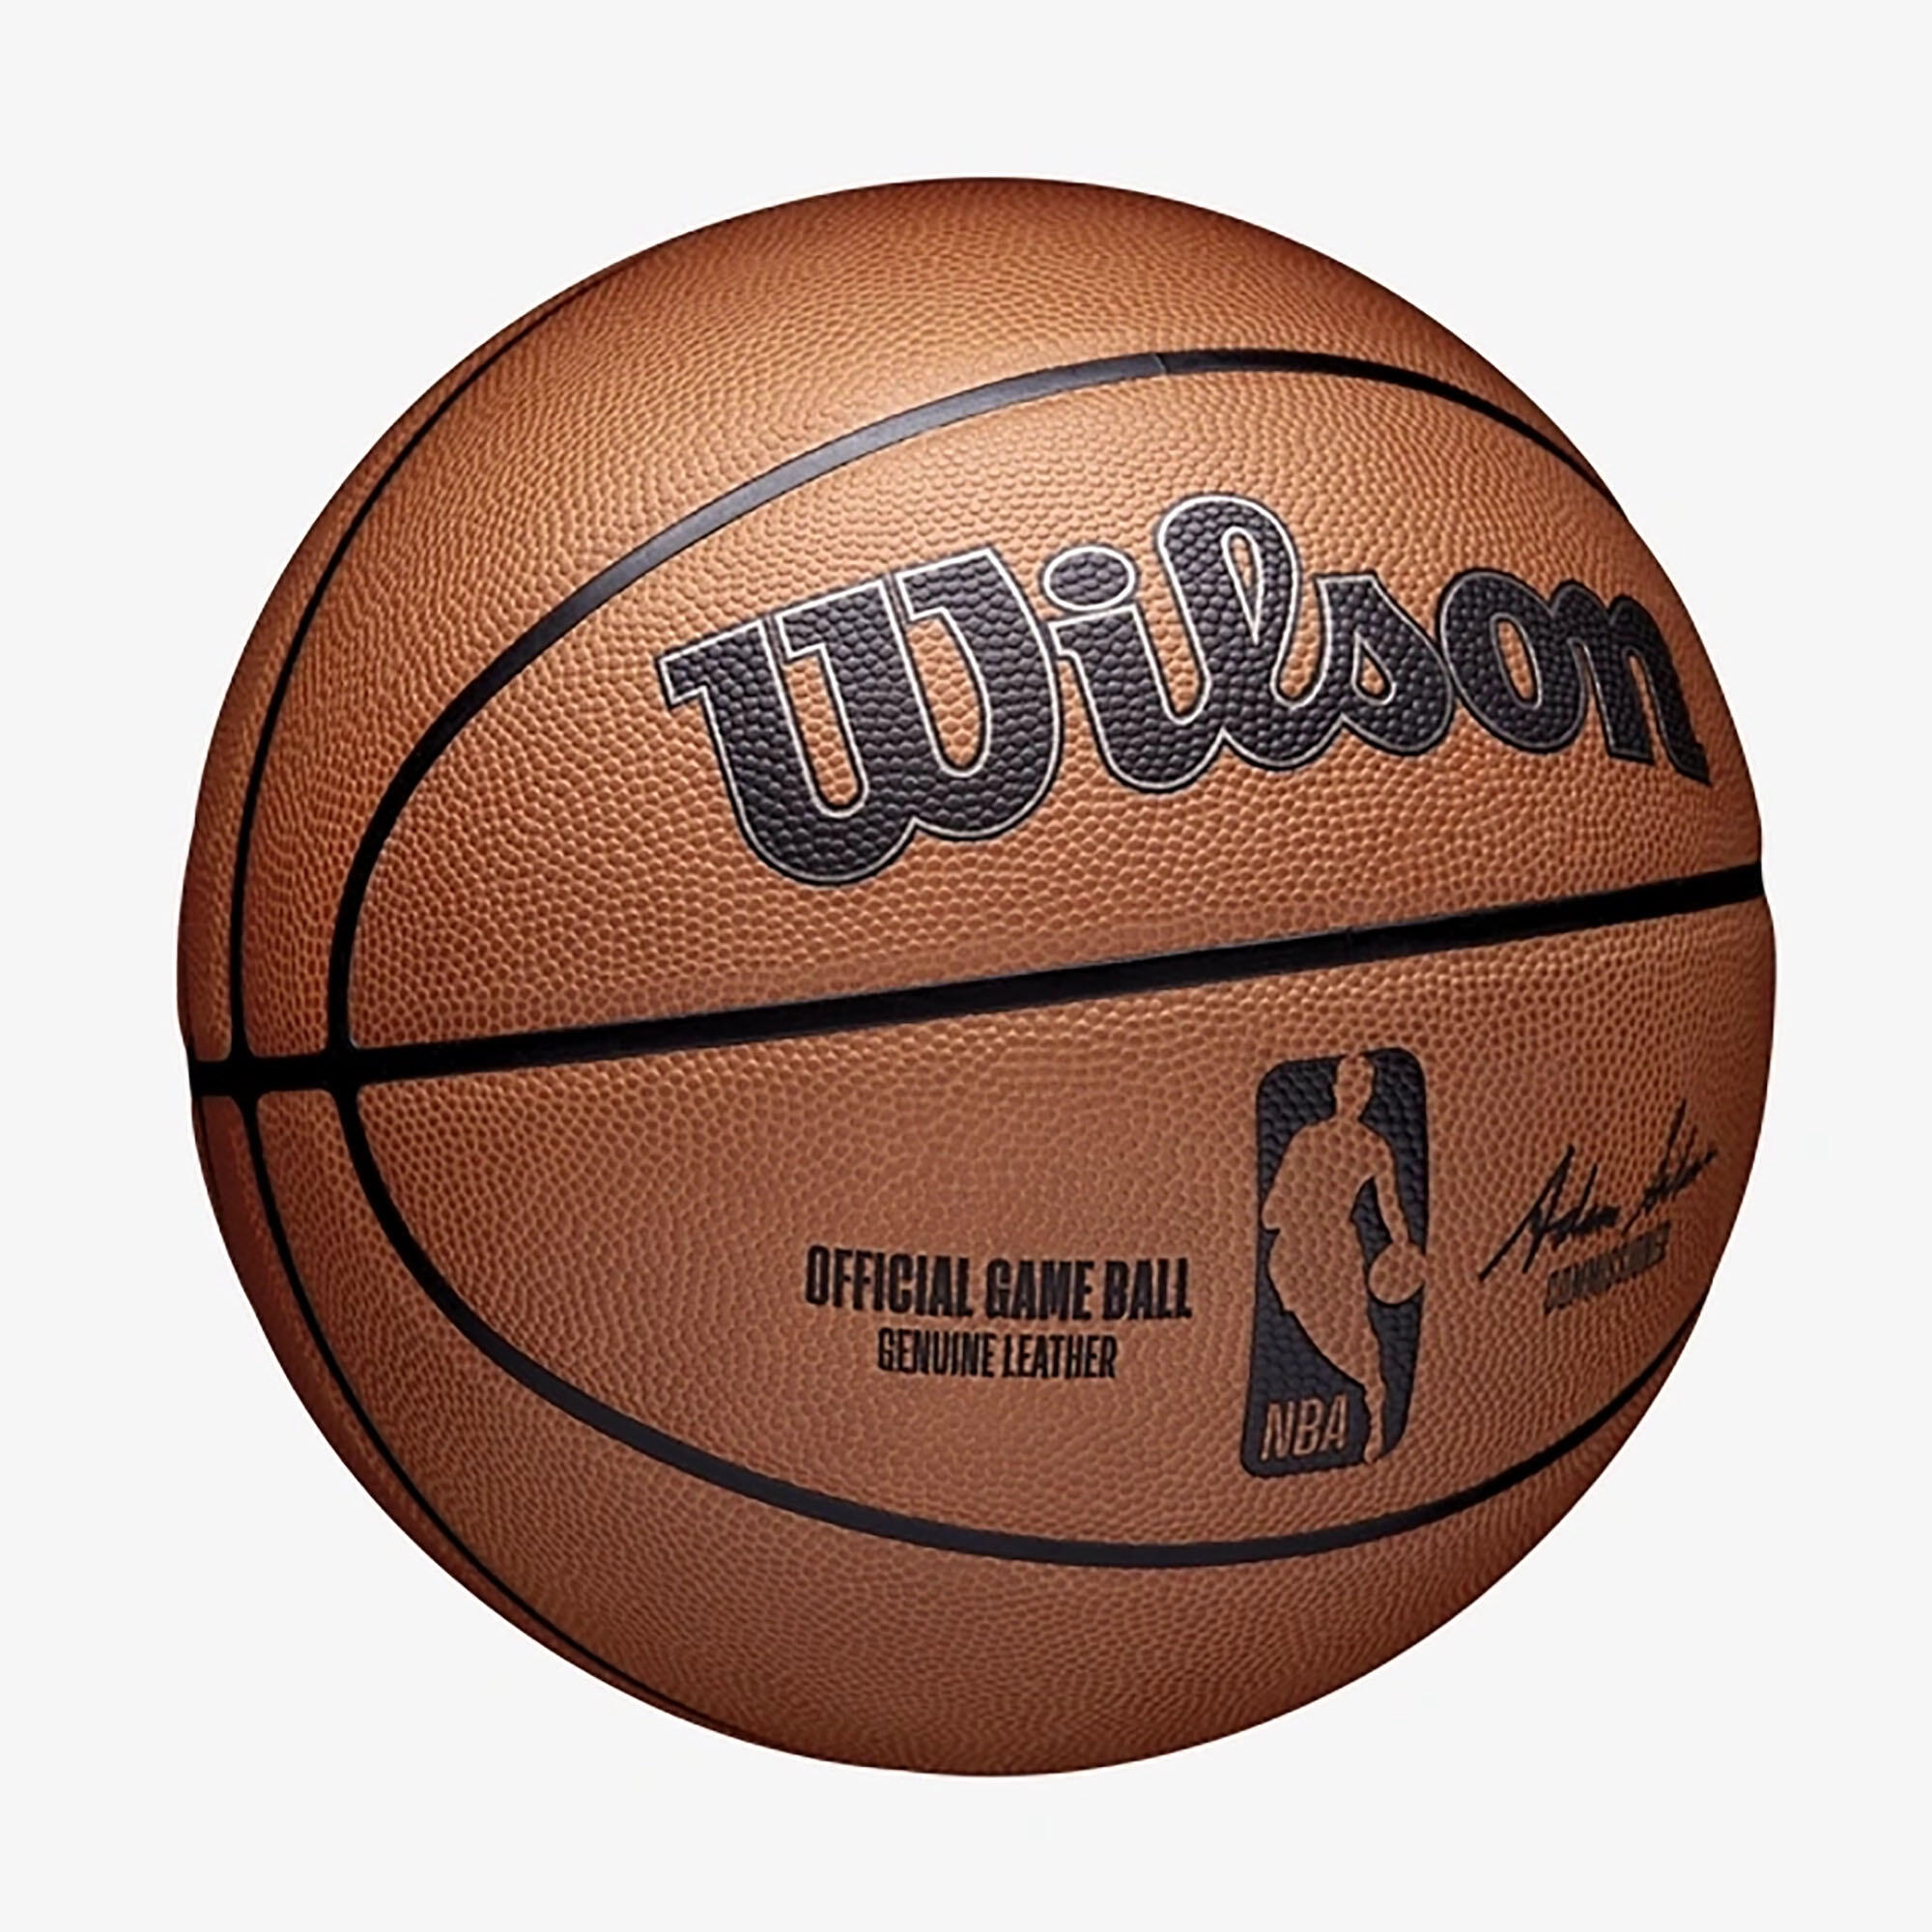 Basketball Size 7 NBA Official Game Ball - Brown 2/5